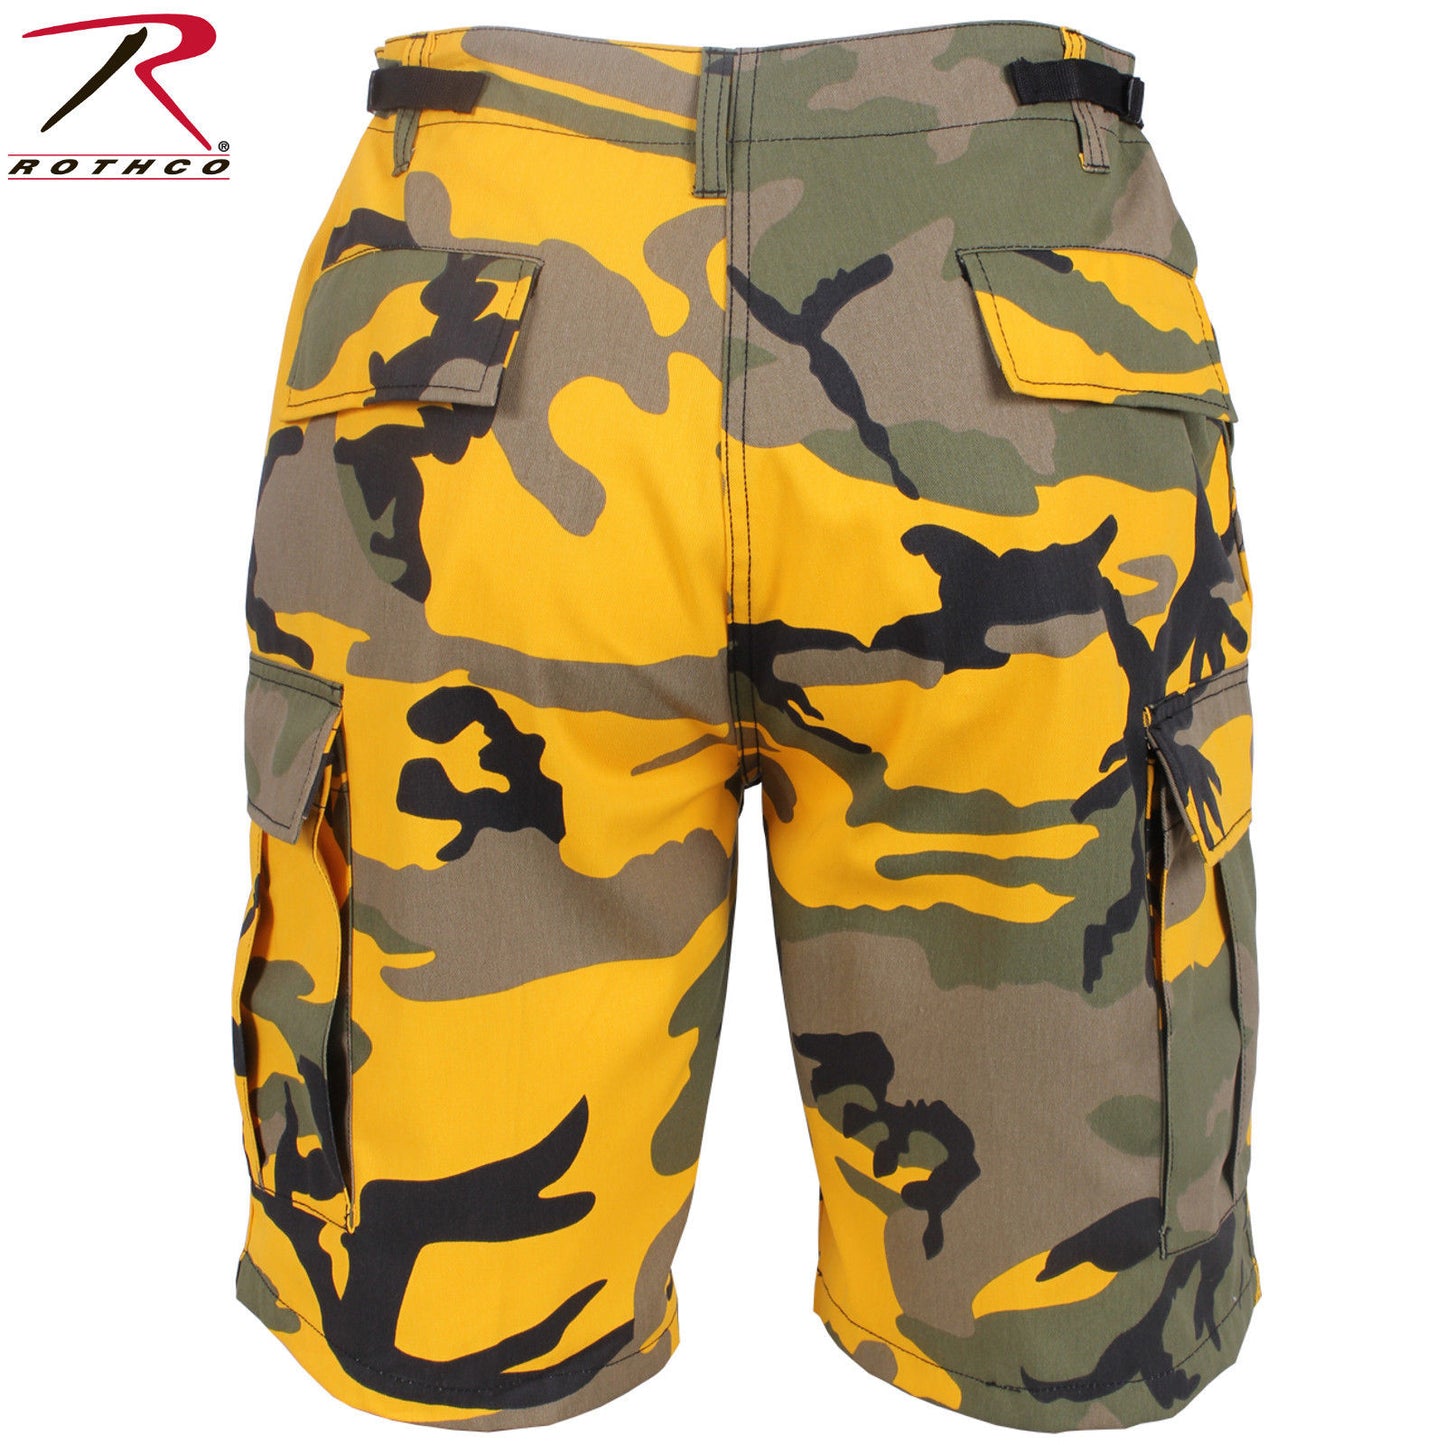 Rothco Colored Camo BDU Shorts - Men's Stinger Yellow  Fashion Shorts